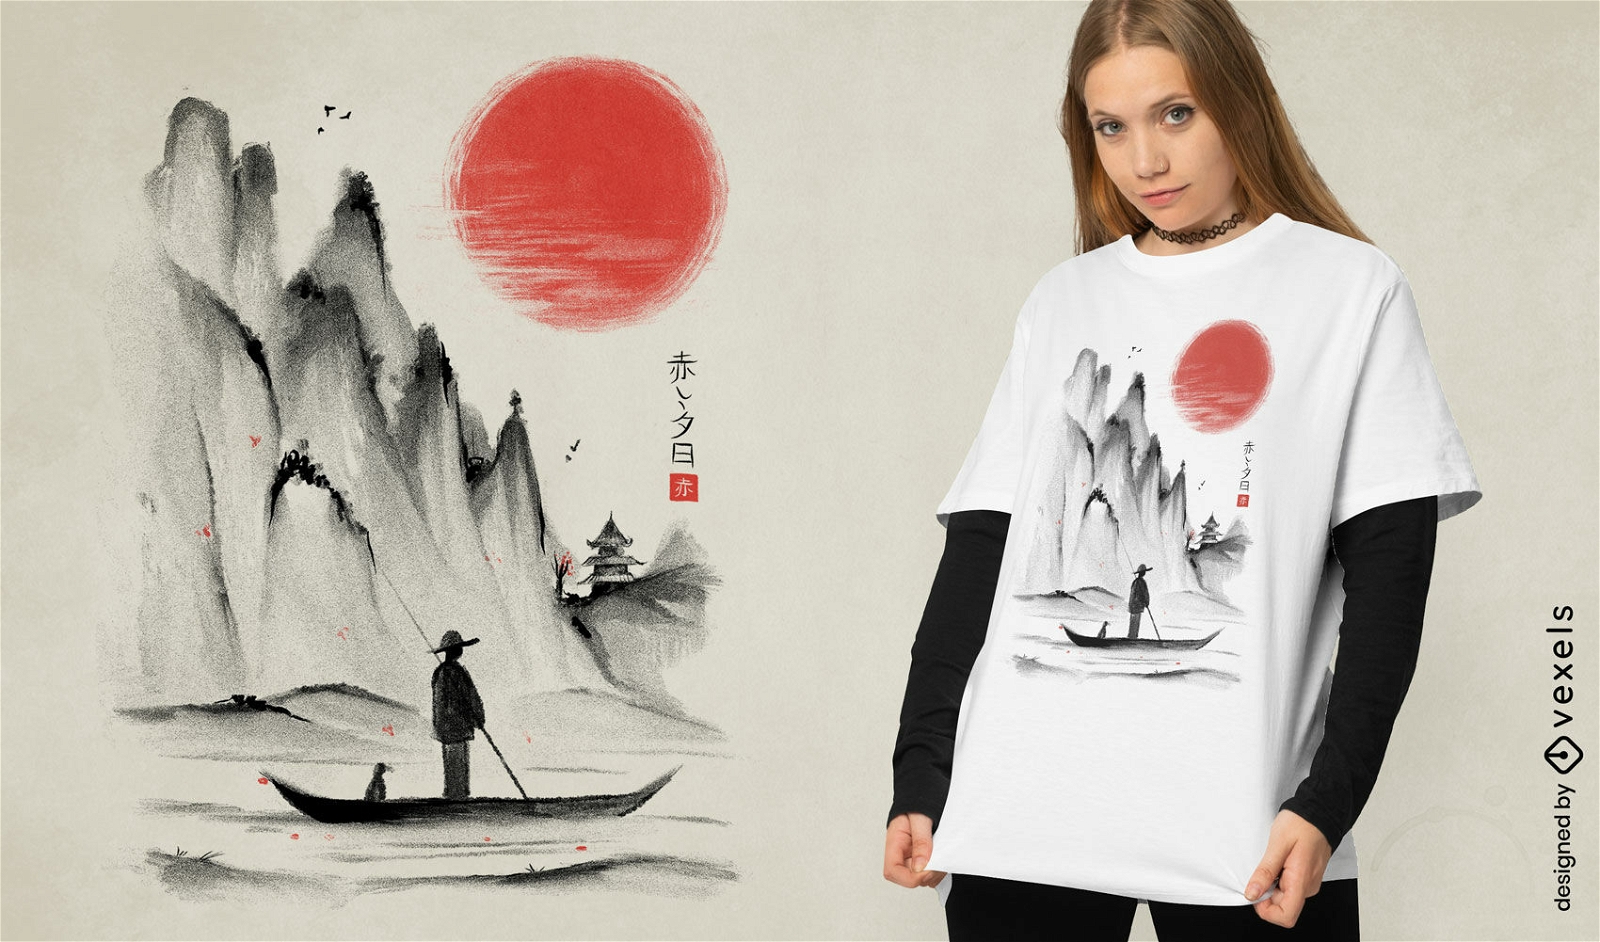 Dise?o de camiseta de paisaje de monta?a y barco japon?s.